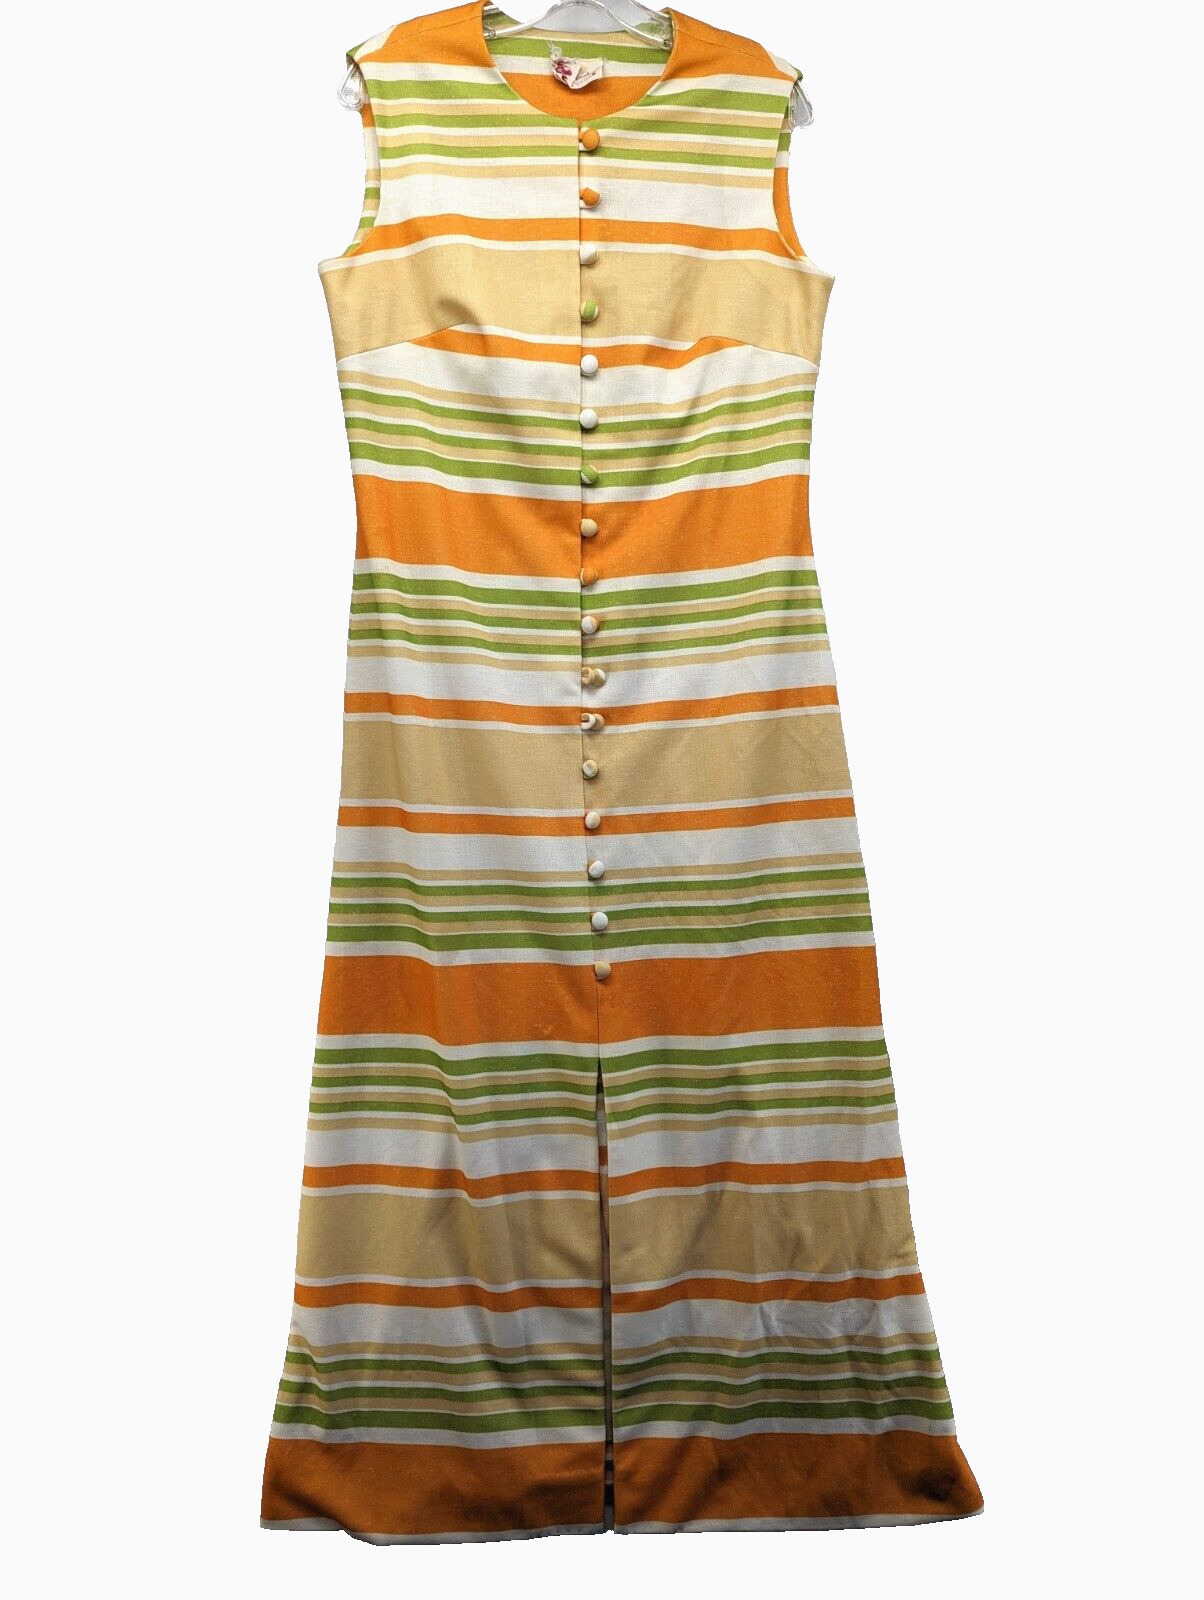 KAY WINDSOR Vintage 70s Orange Green Stripe Button Front  Dress Sz Medium